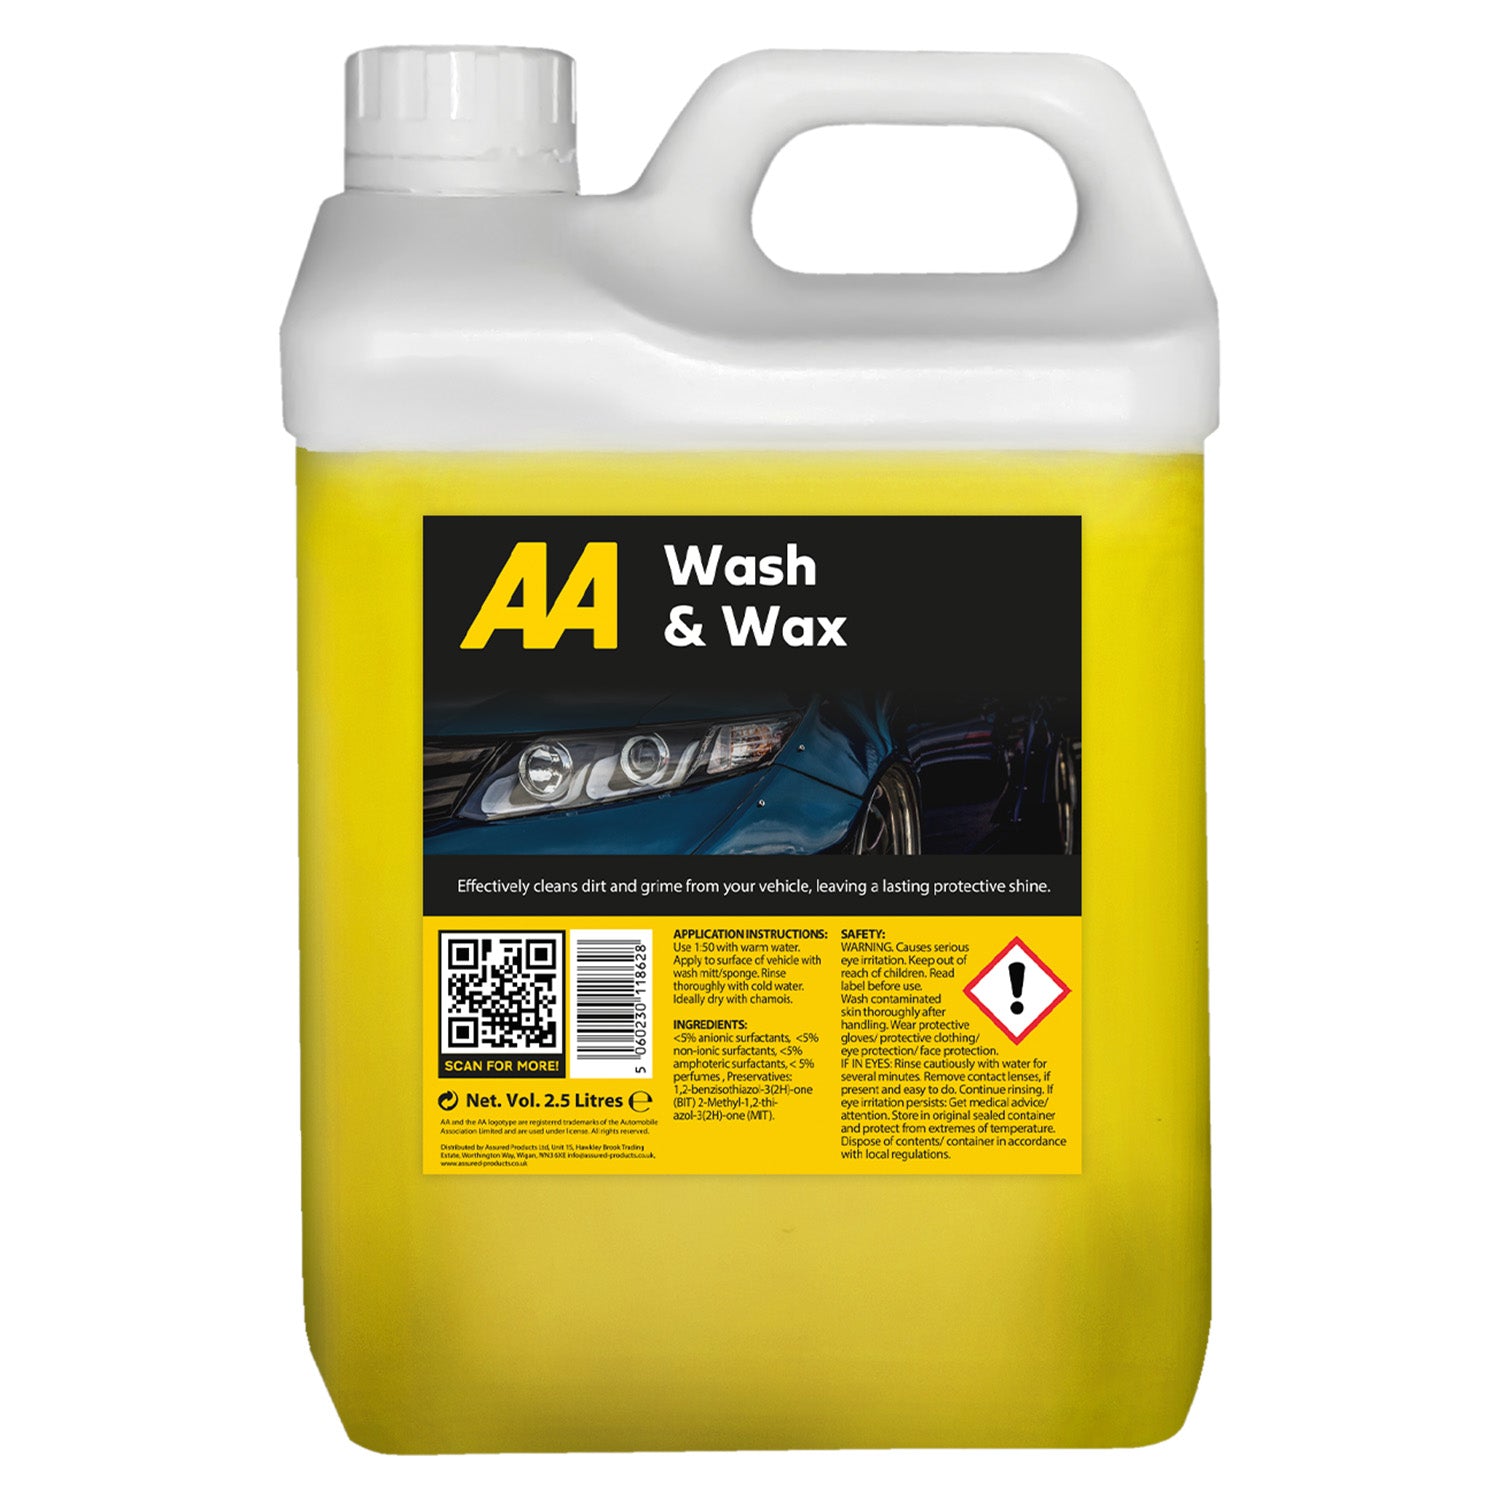 AA Wash and Wax Car Shampoo 2 x 2.5 Litre